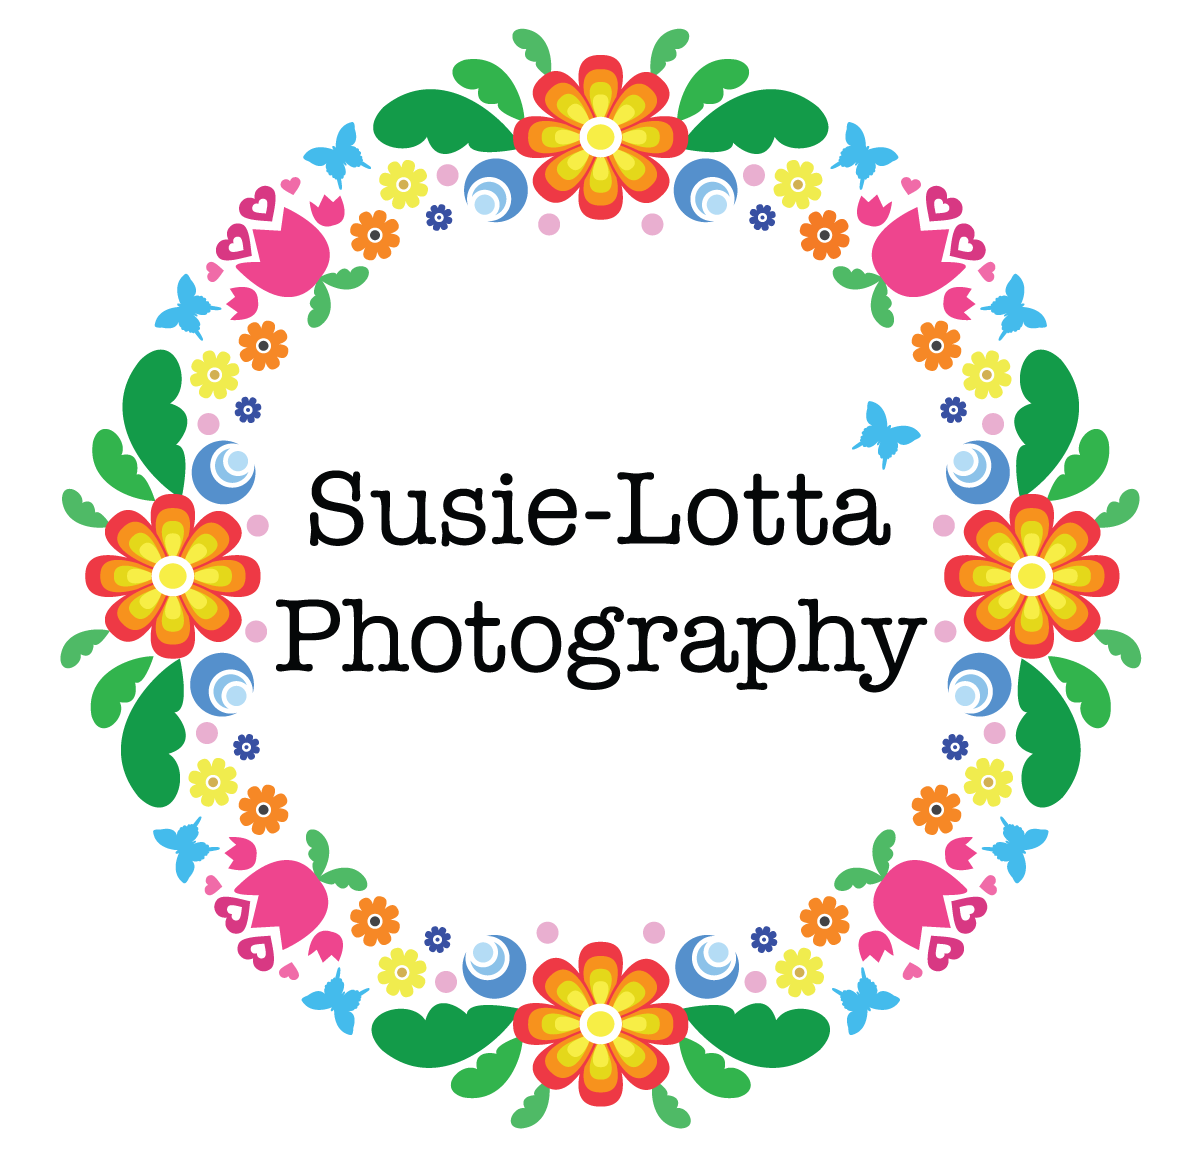 Susie-Lotta Photography